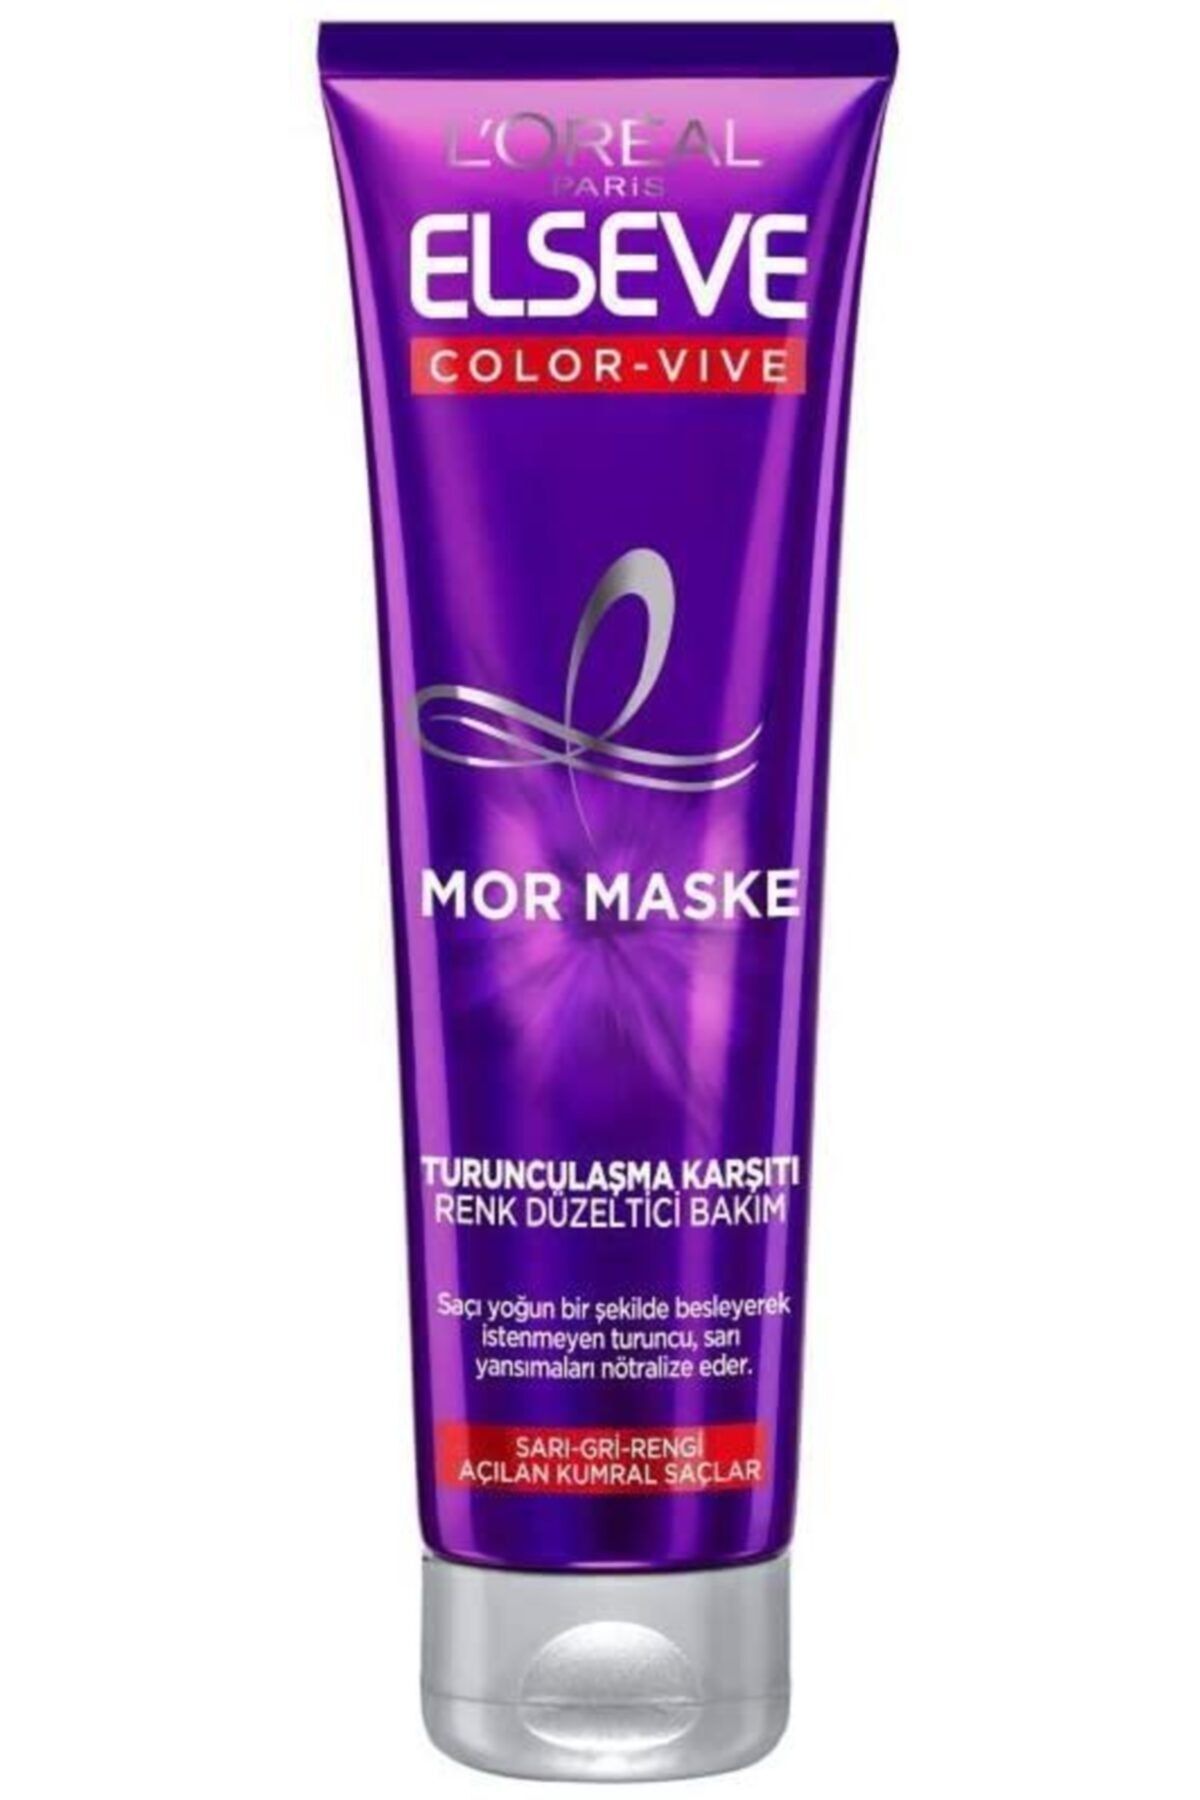 Elseve L'oréal Paris Turunculaşma Karşıtı Renk Düzeltici Mor Maske